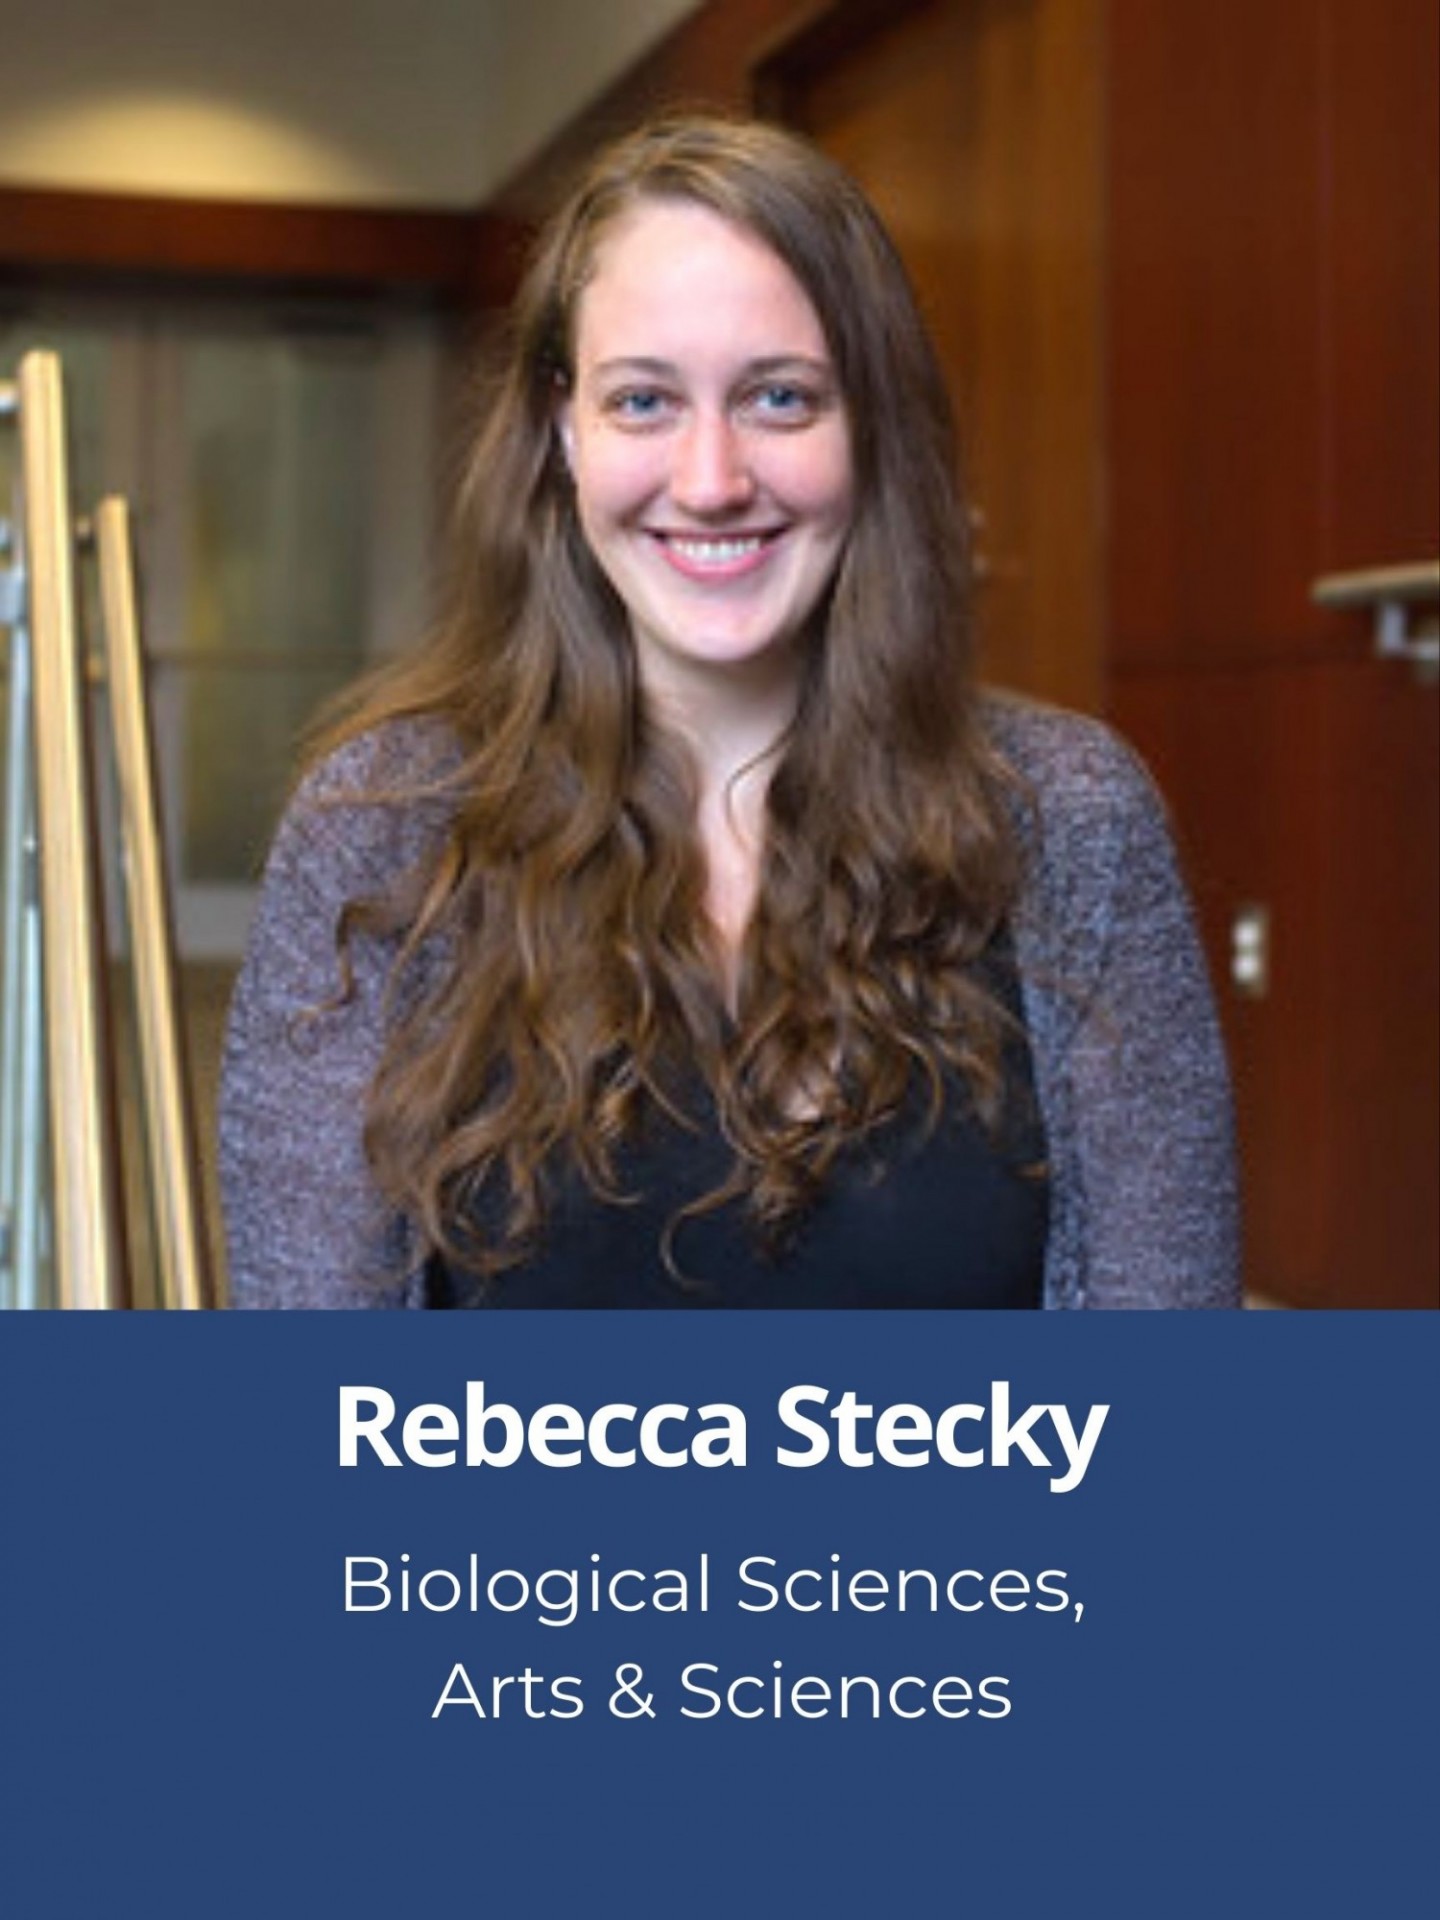 Rebecca Stecky